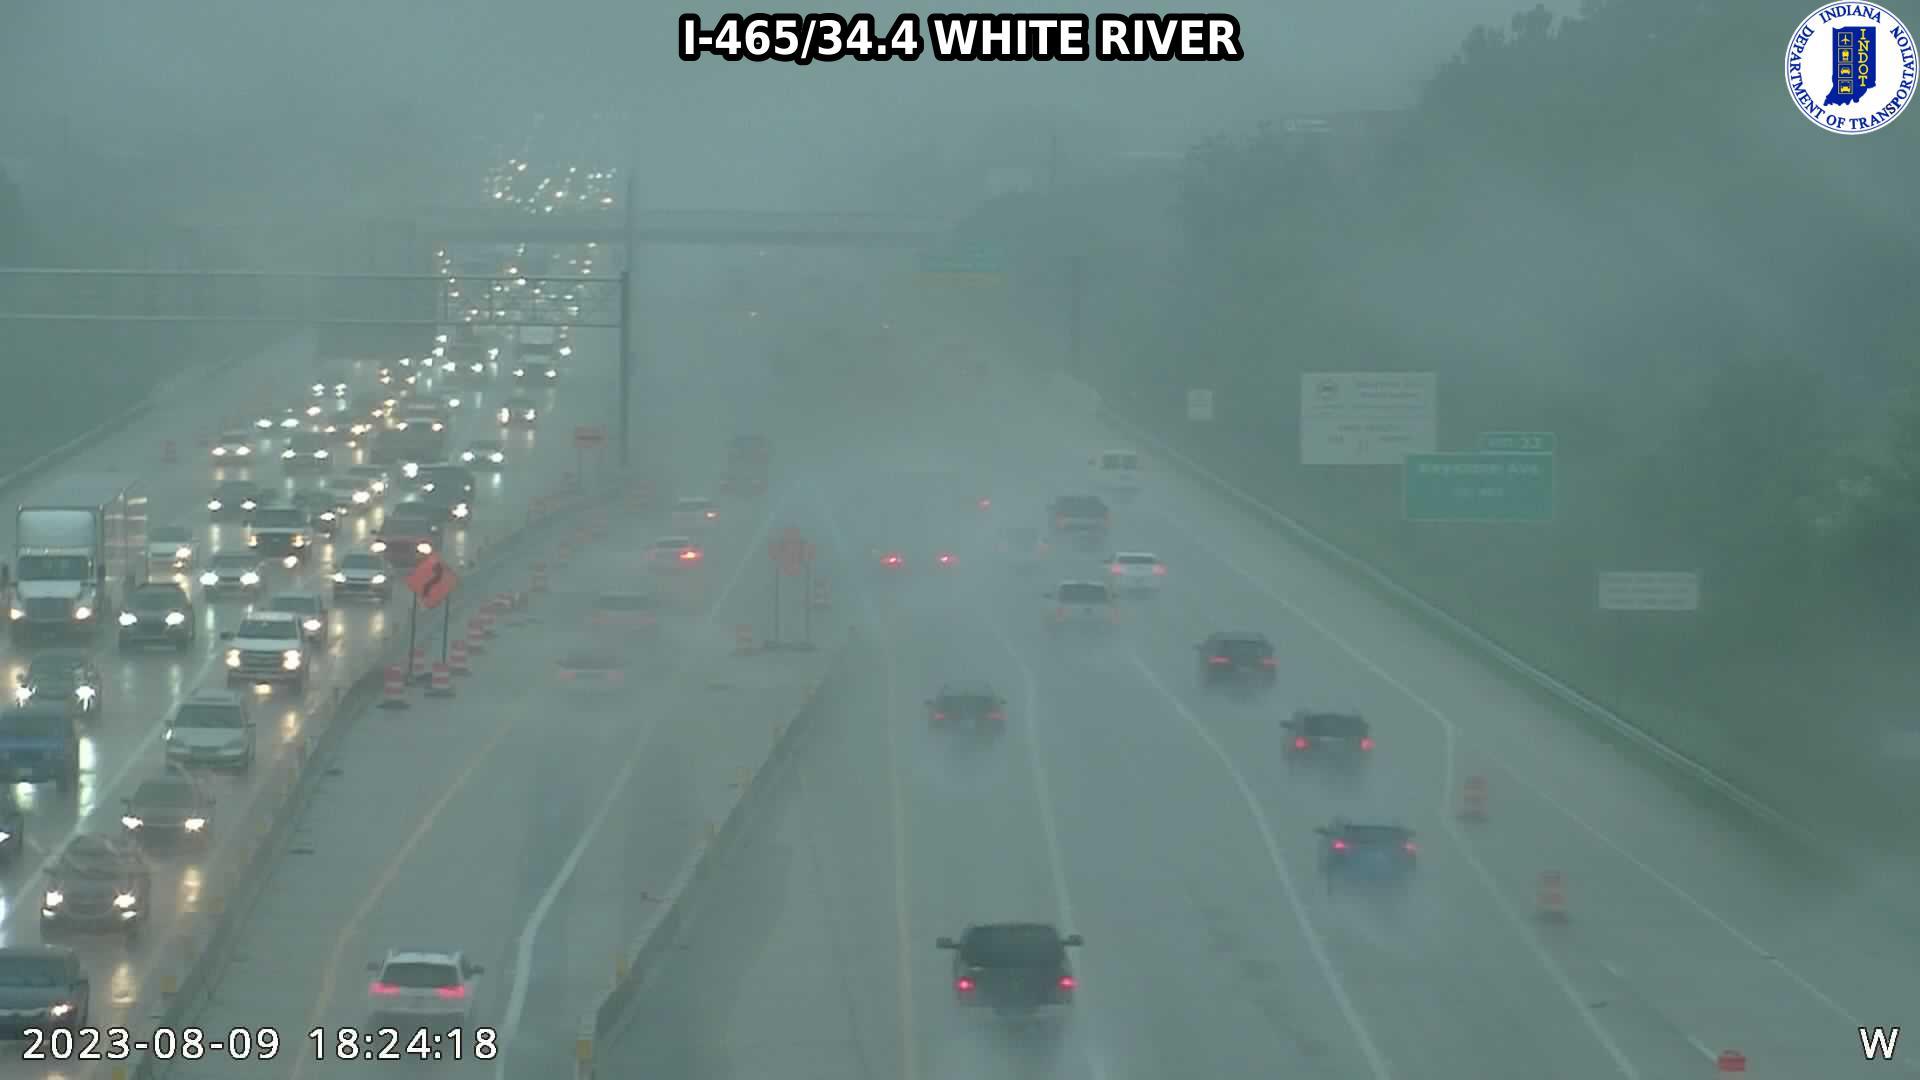 Indianapolis: I-465: I-465/34.4 WHITE RIVER Traffic Camera